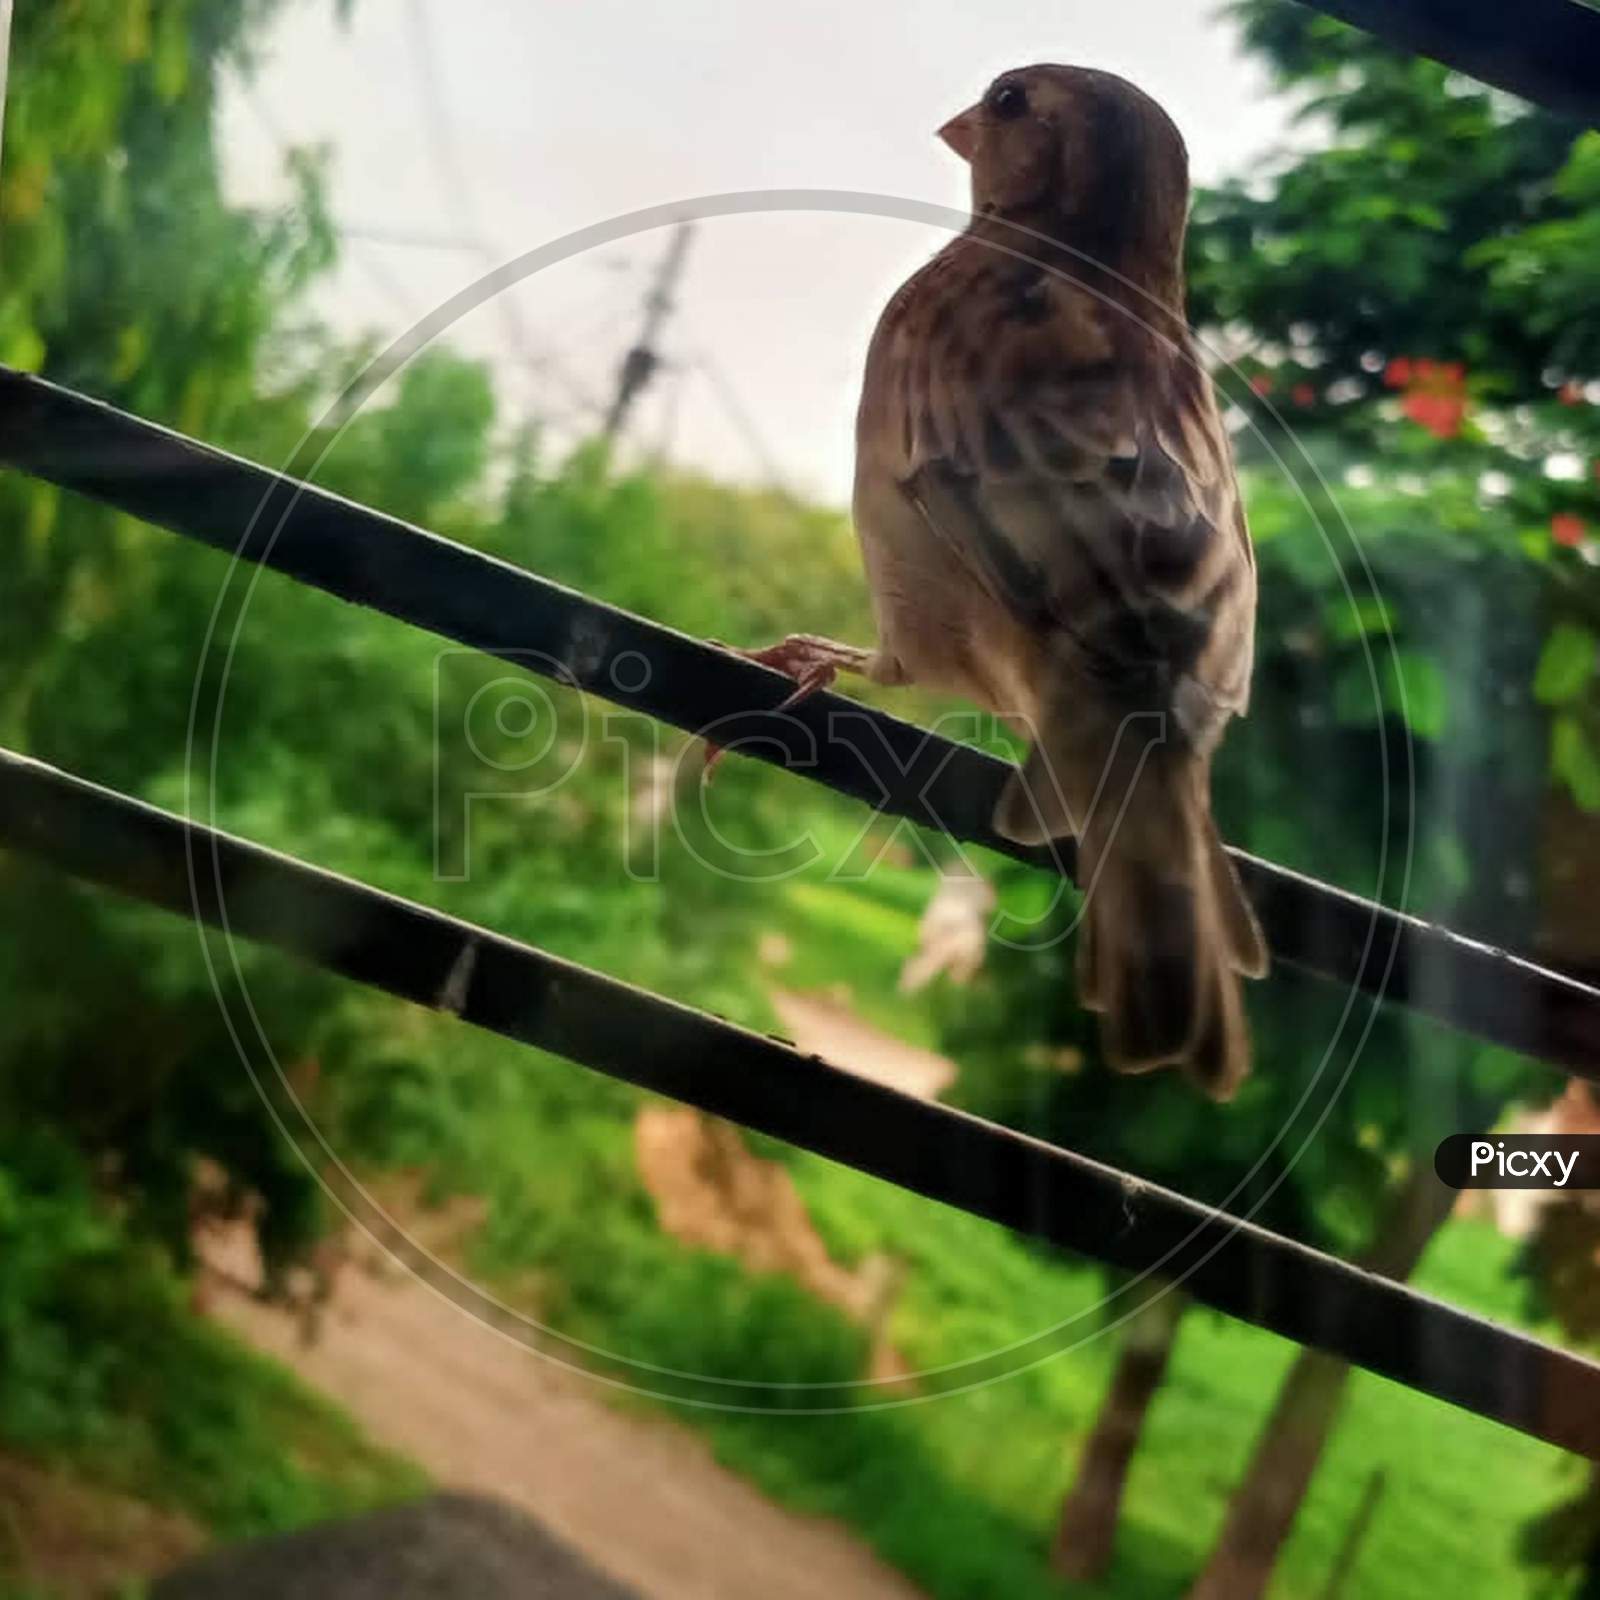 Red-tailed hawk×Remove  Wildlife×Remove  Hawk×Remove  Beak×Remove  Bird×Remove  Fence×Remove  Adaptation×Remove  Tail×Remove  Bird of prey×Remove  Falconiformes×